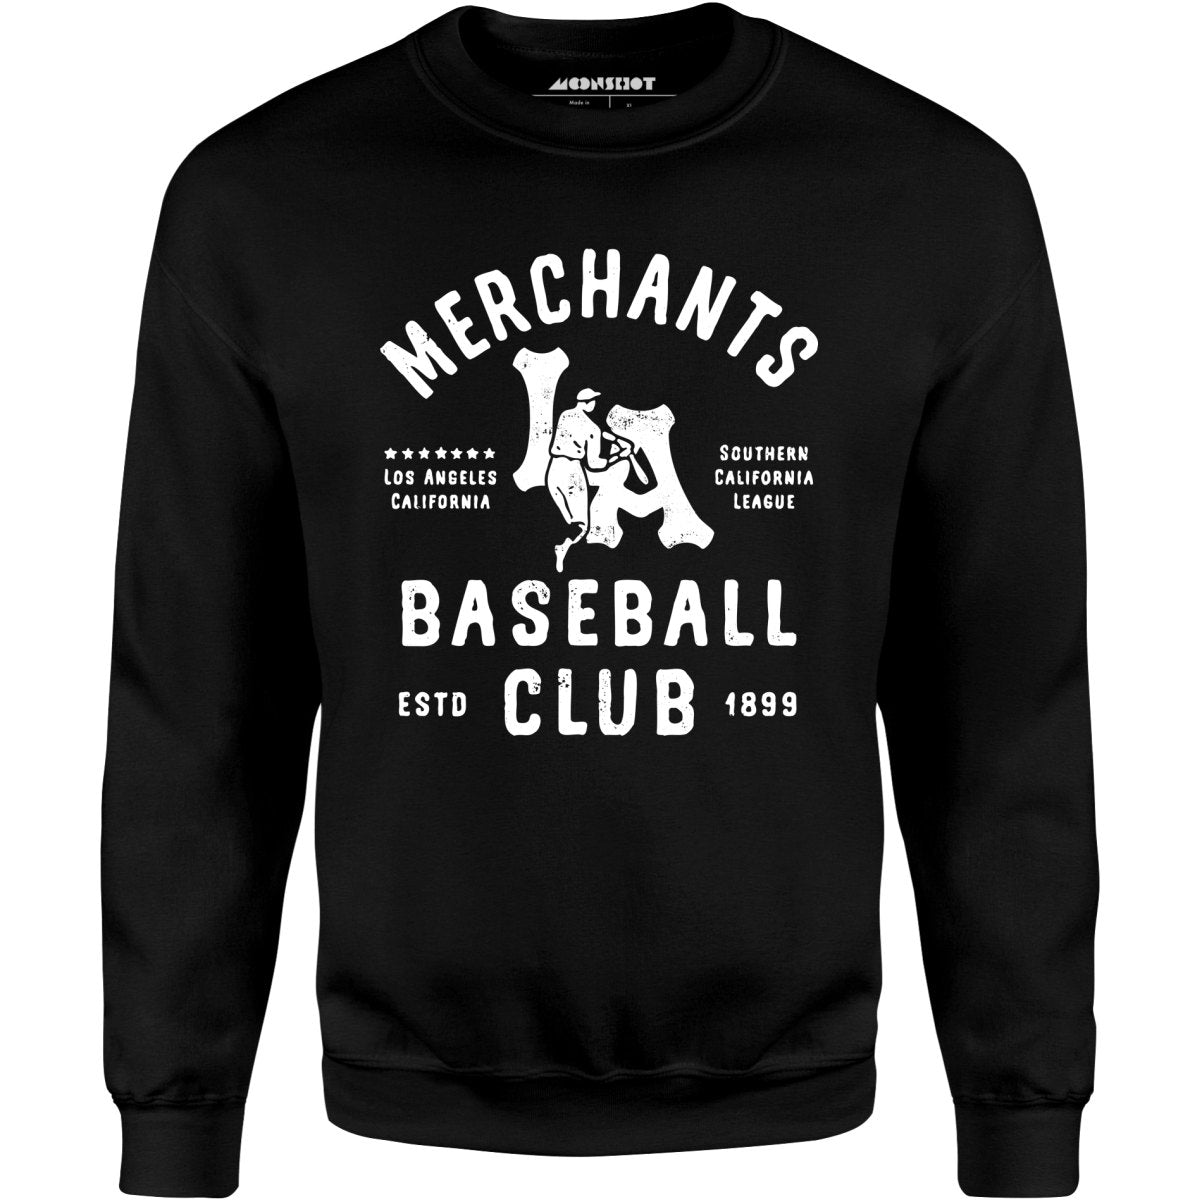 Los Angeles Merchants - California - Vintage Defunct Baseball Teams - Unisex Sweatshirt